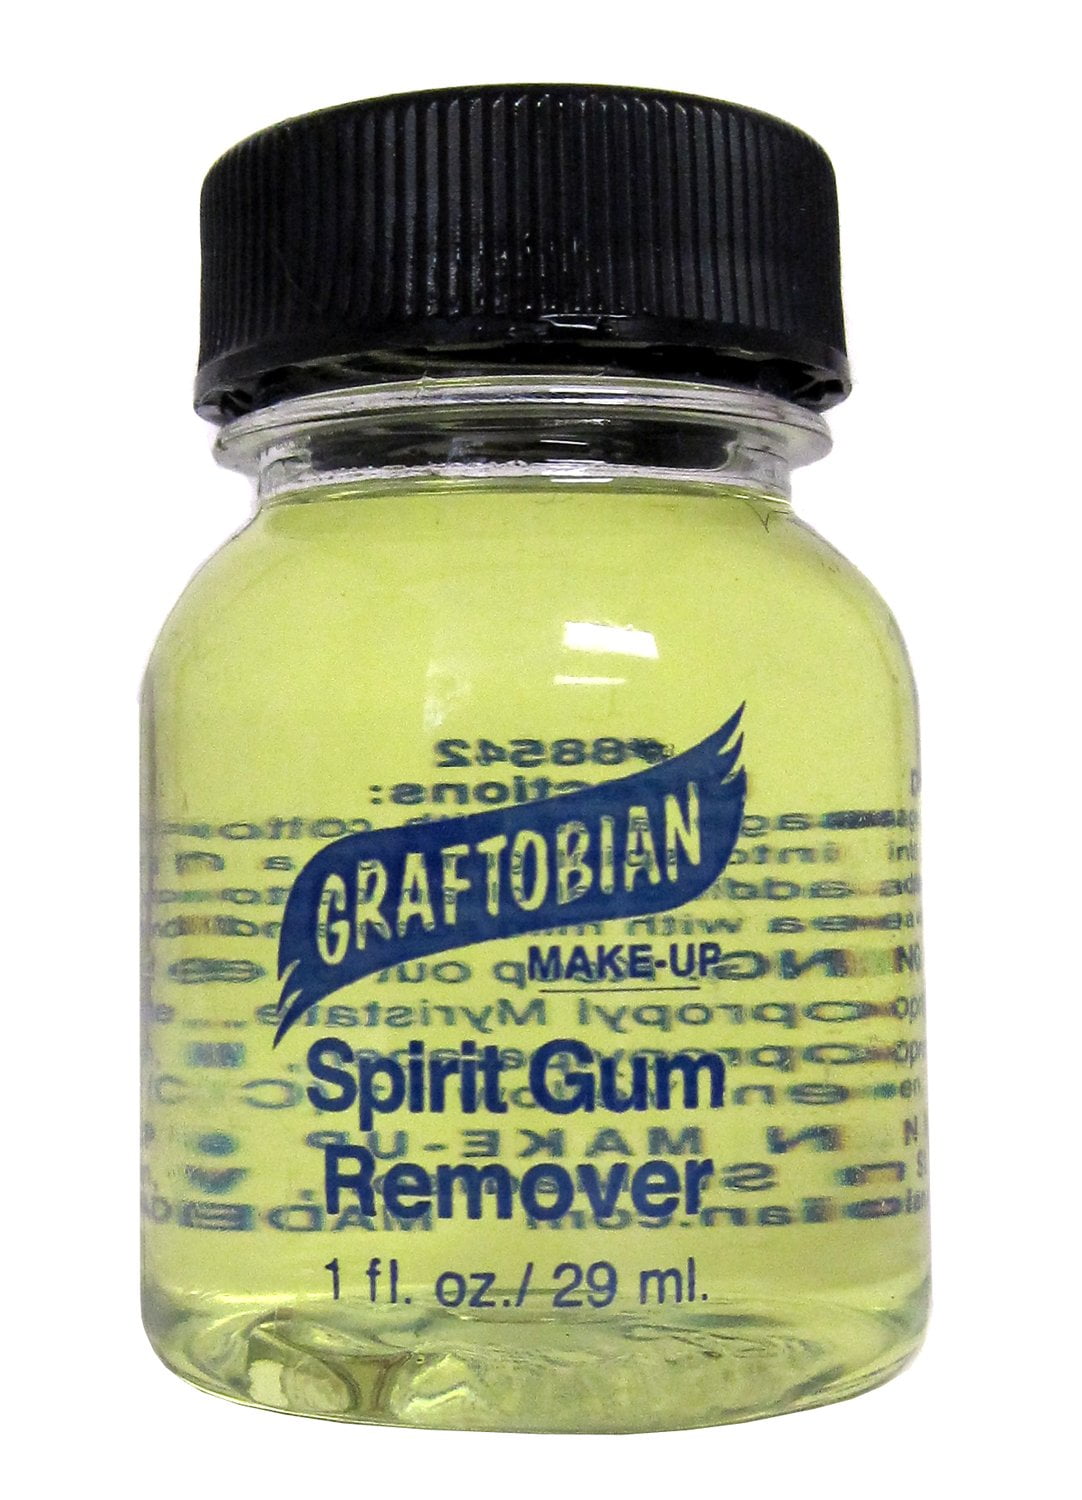 Graftobian Spirit Gum 0.25 Ounce Theatrical Adhesive